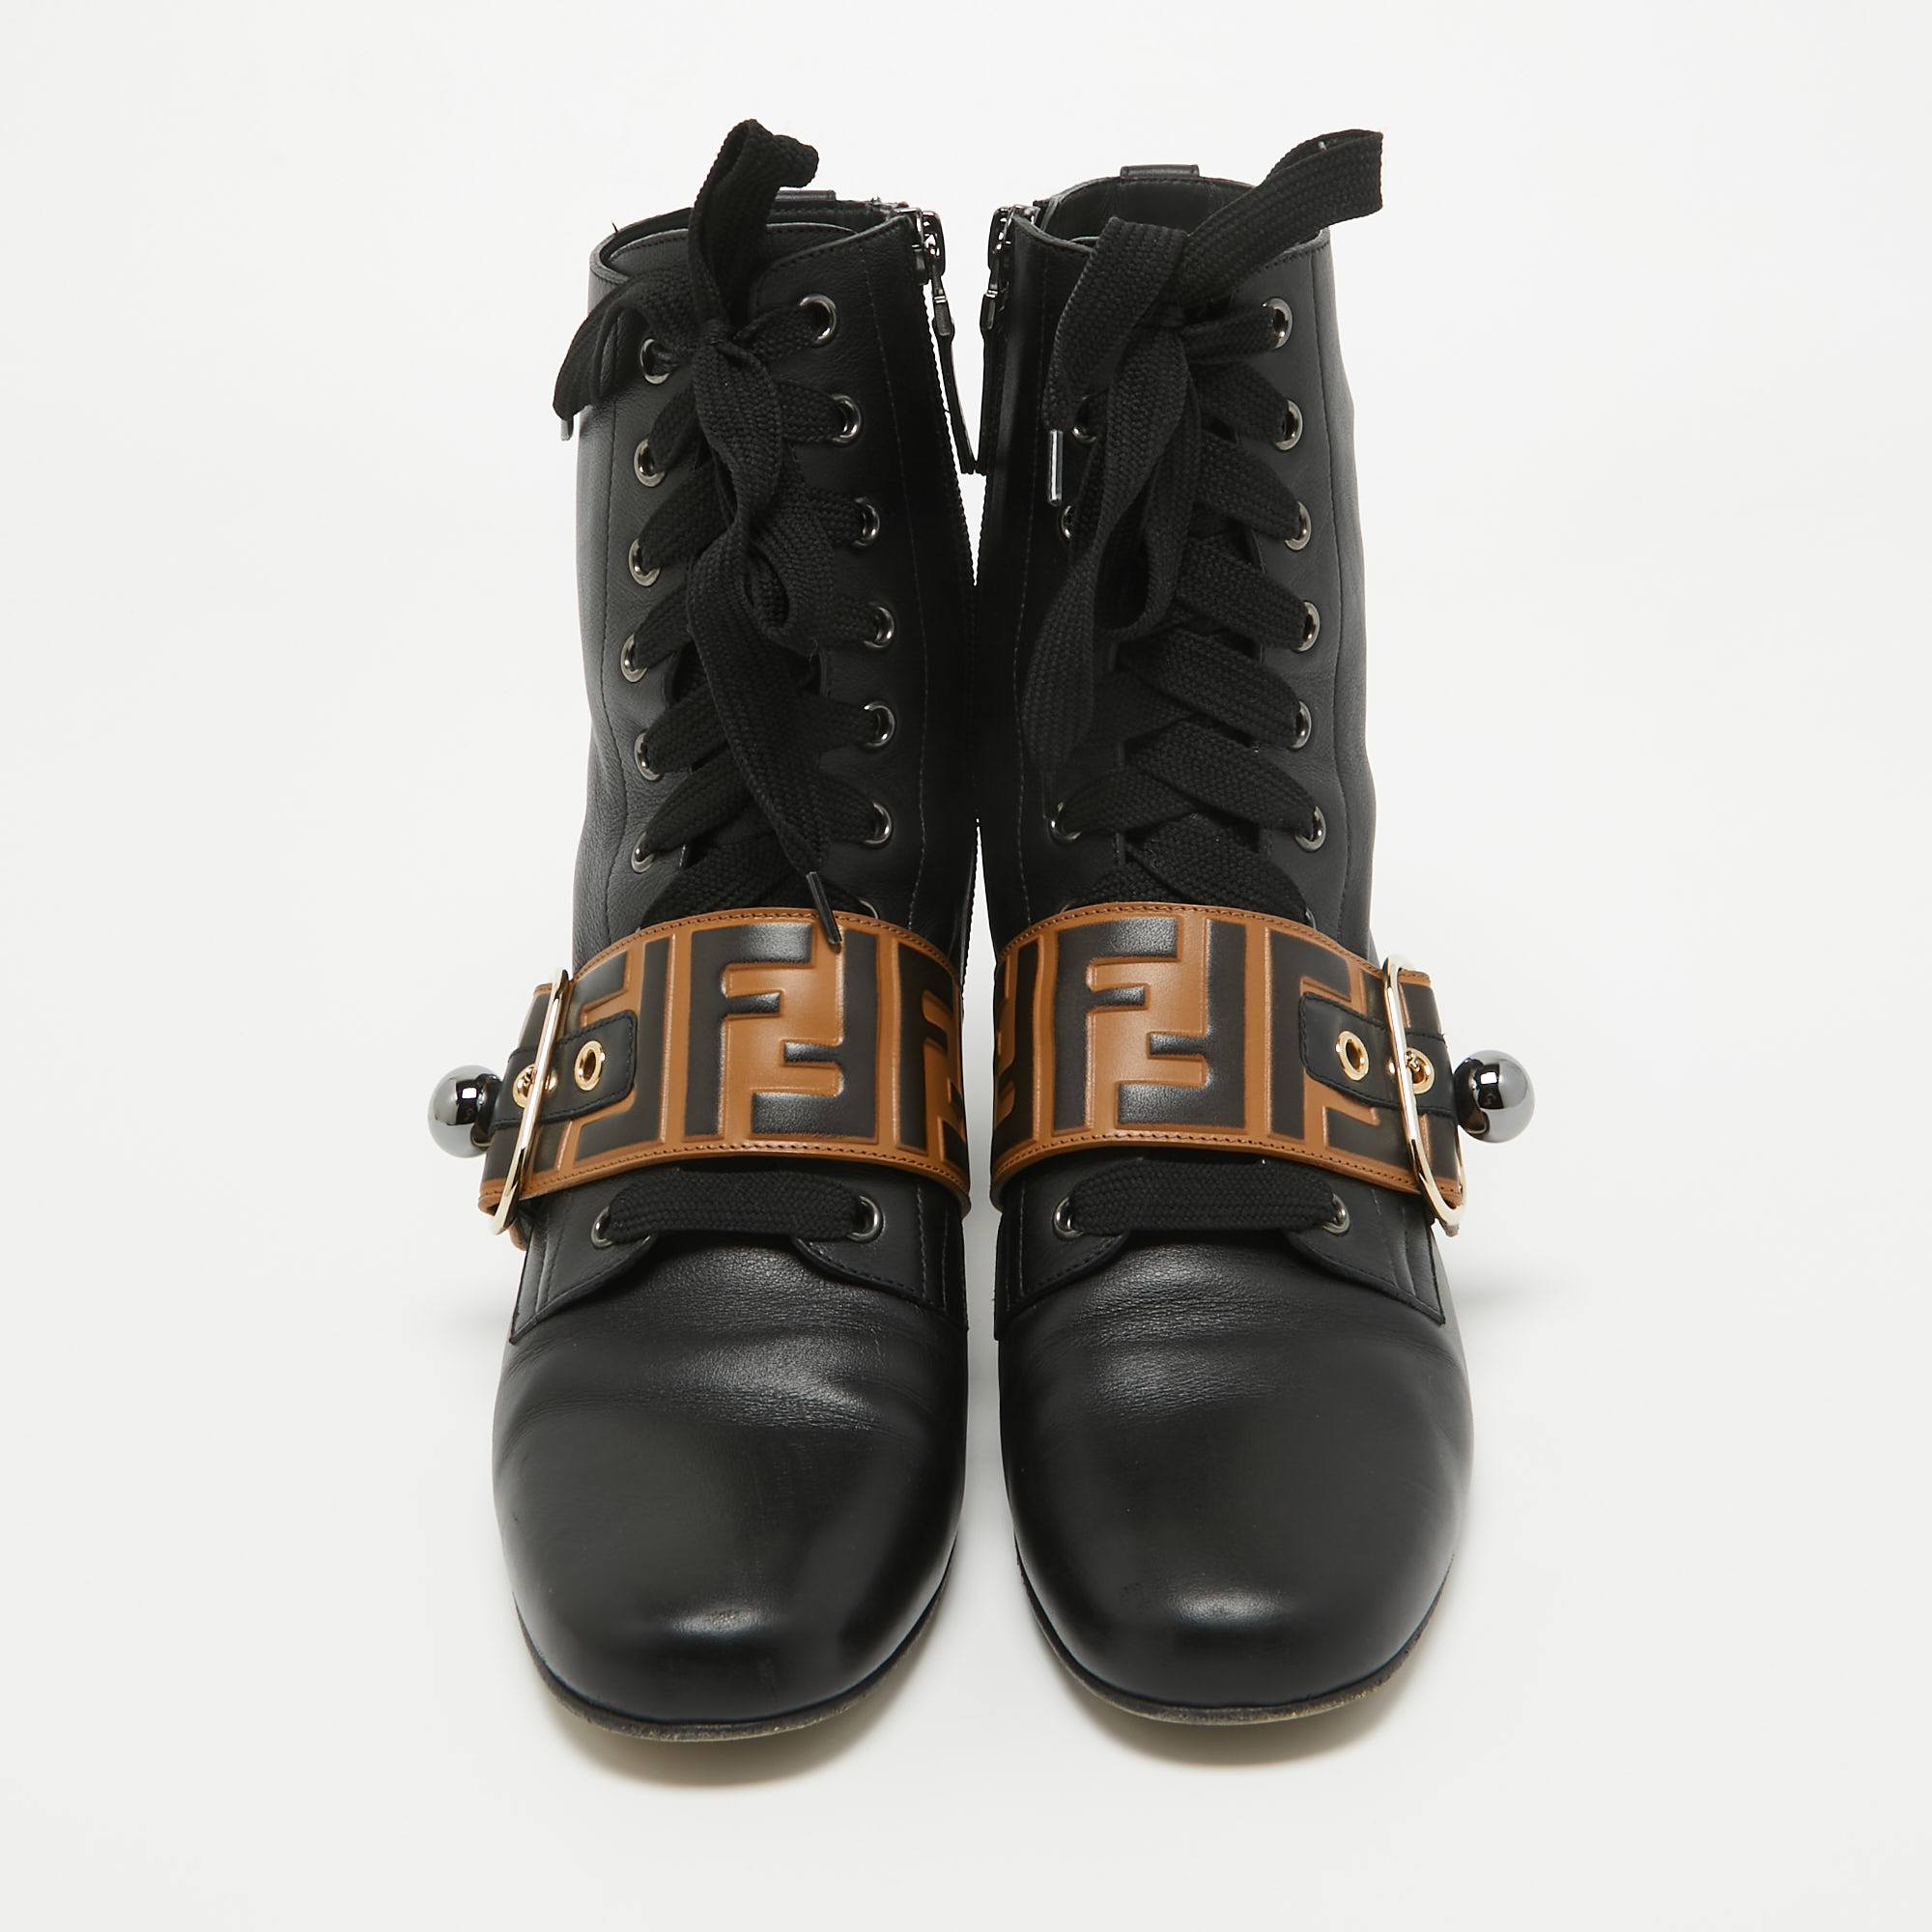 Fendi Black/Beige Leather FF Logo Ankle Boots Size 39